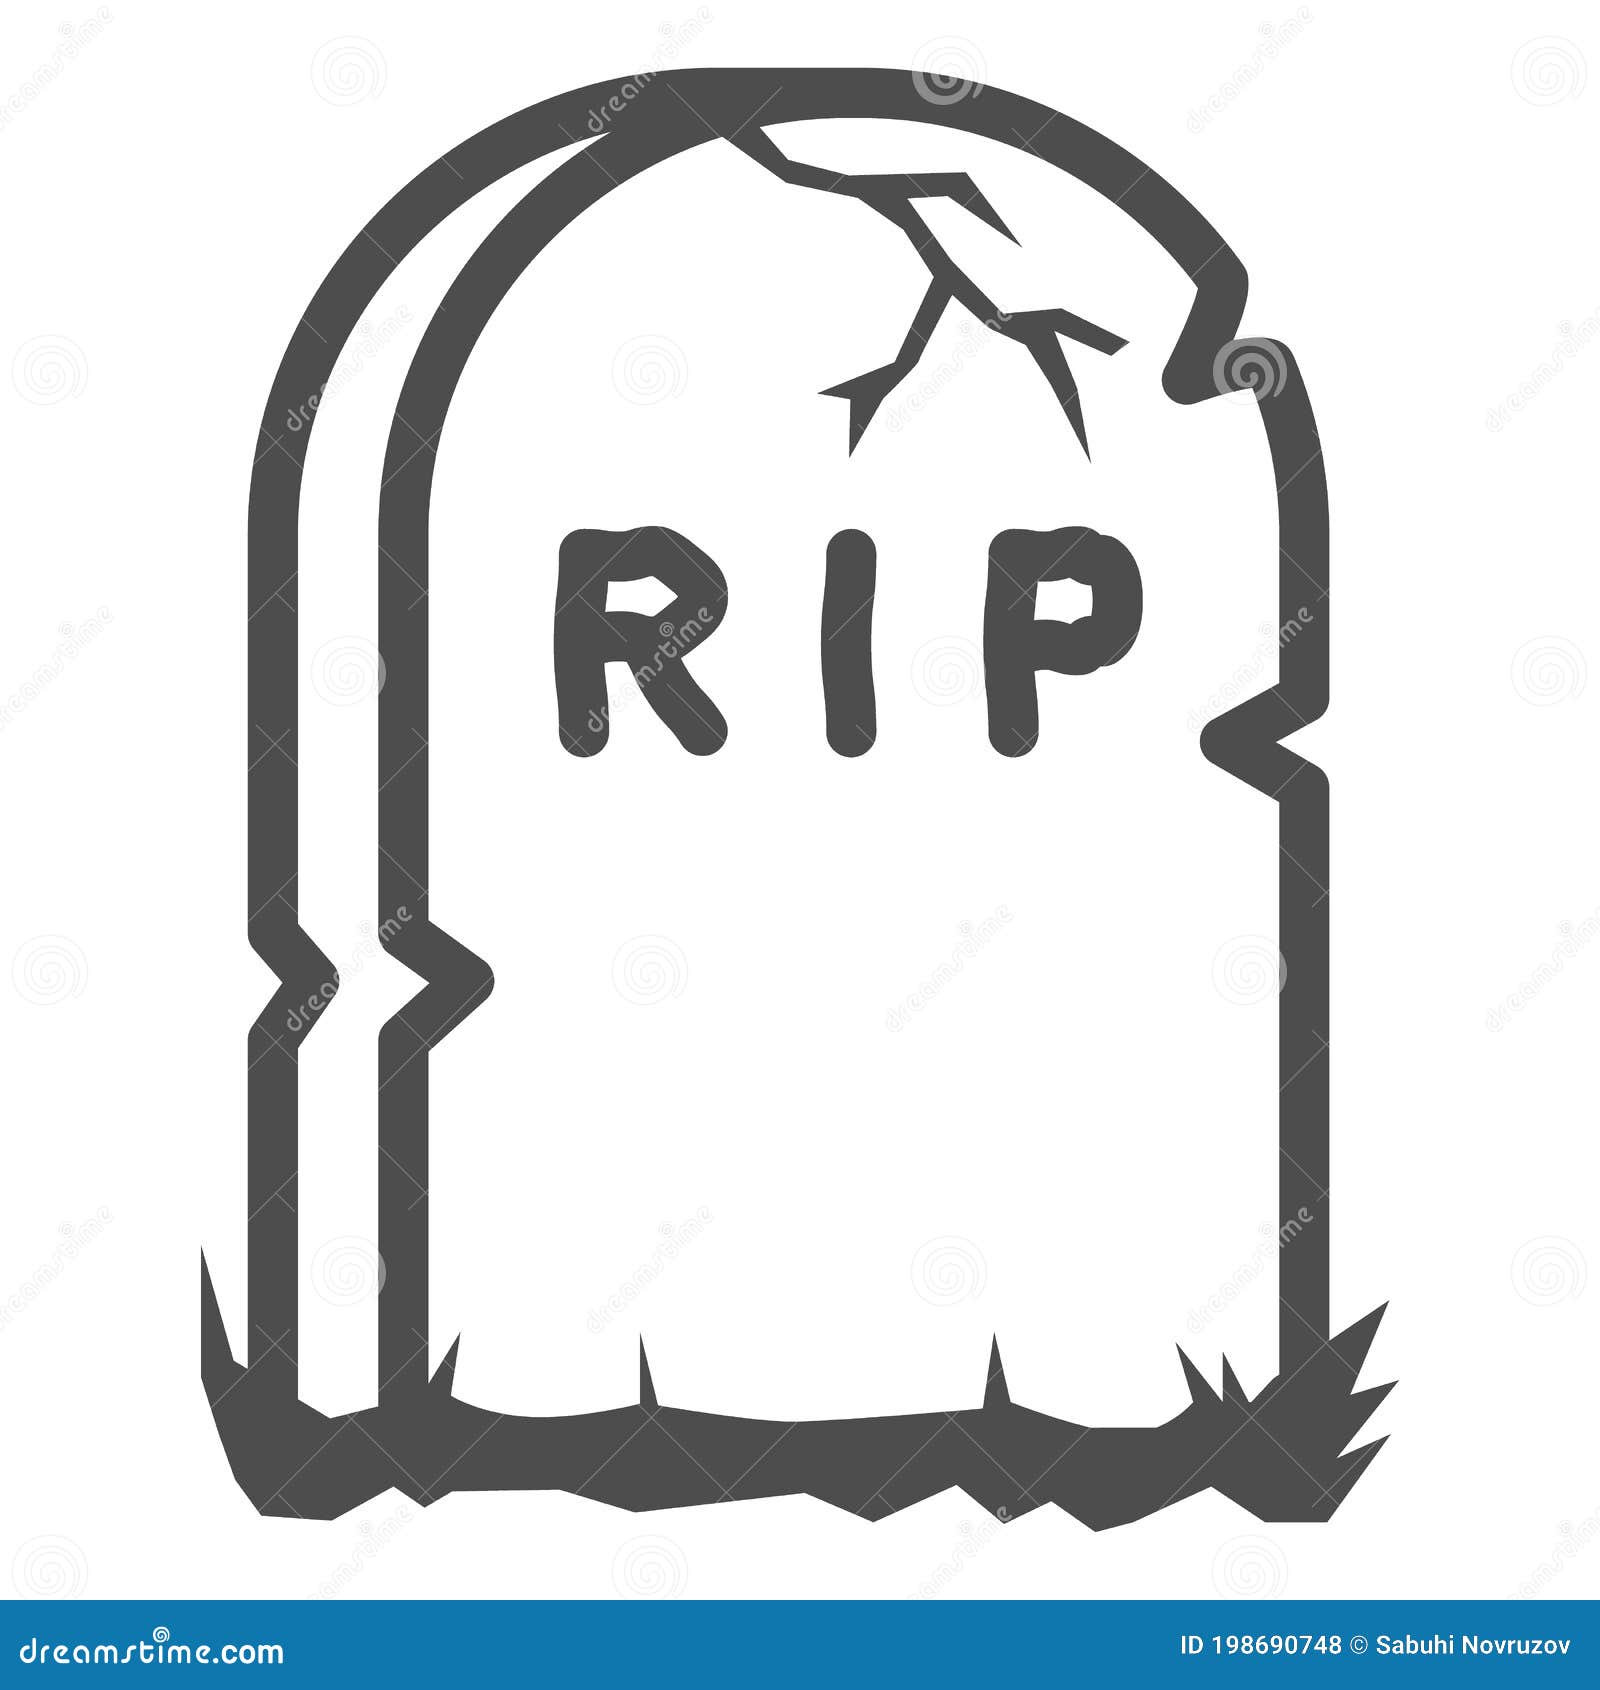 Death, funeral, grave, gravestone, halloween, rip icon - Free download